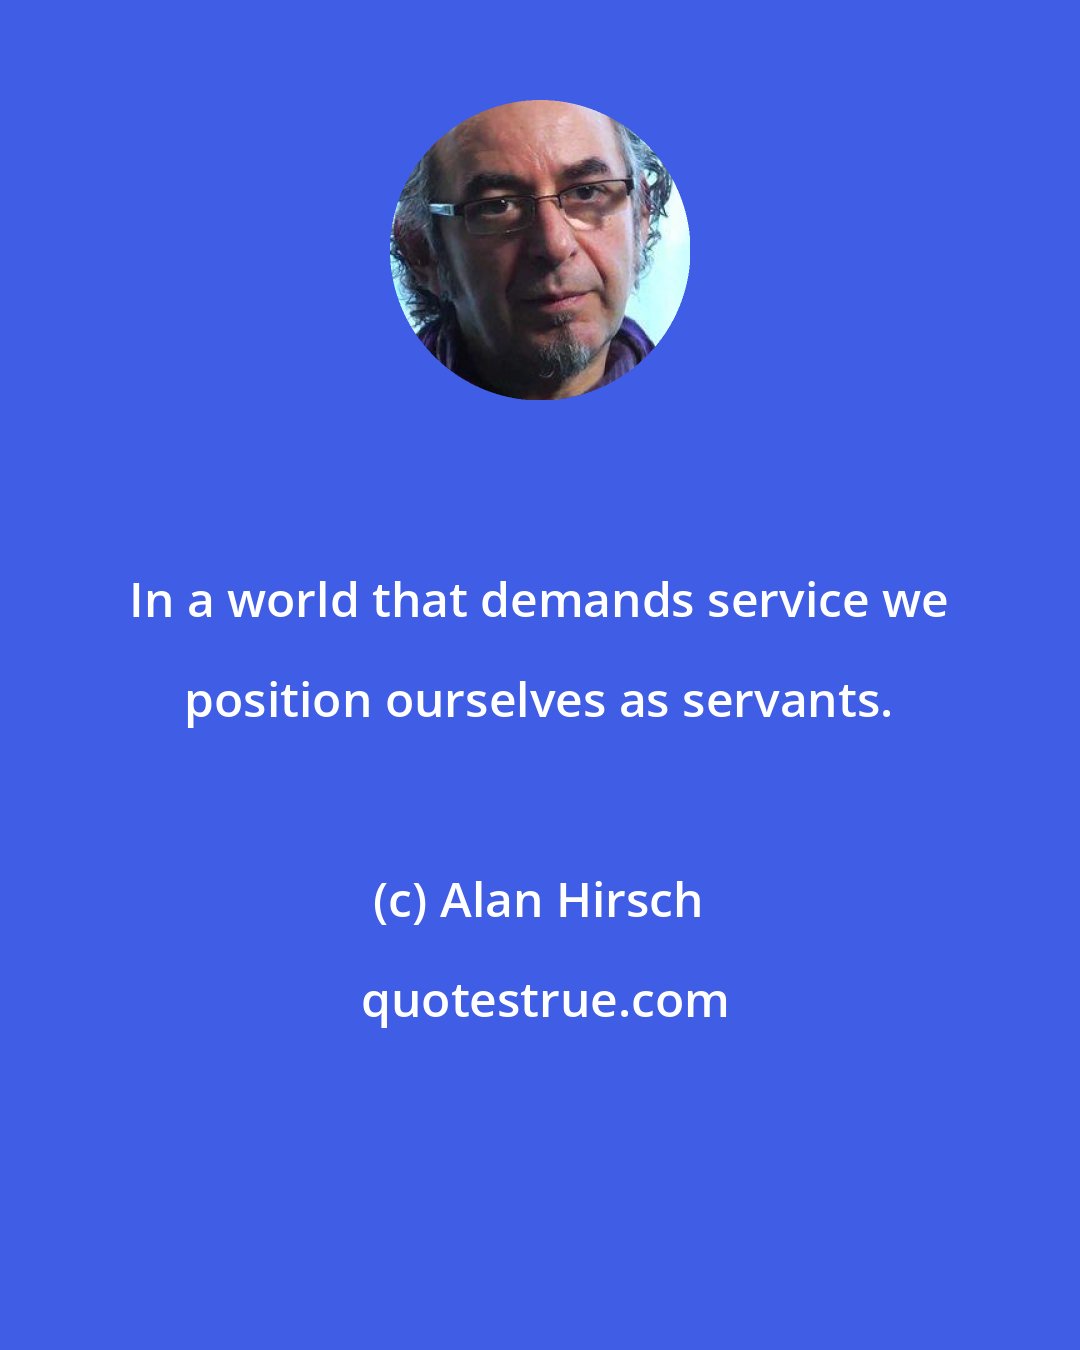 Alan Hirsch: In a world that demands service we position ourselves as servants.